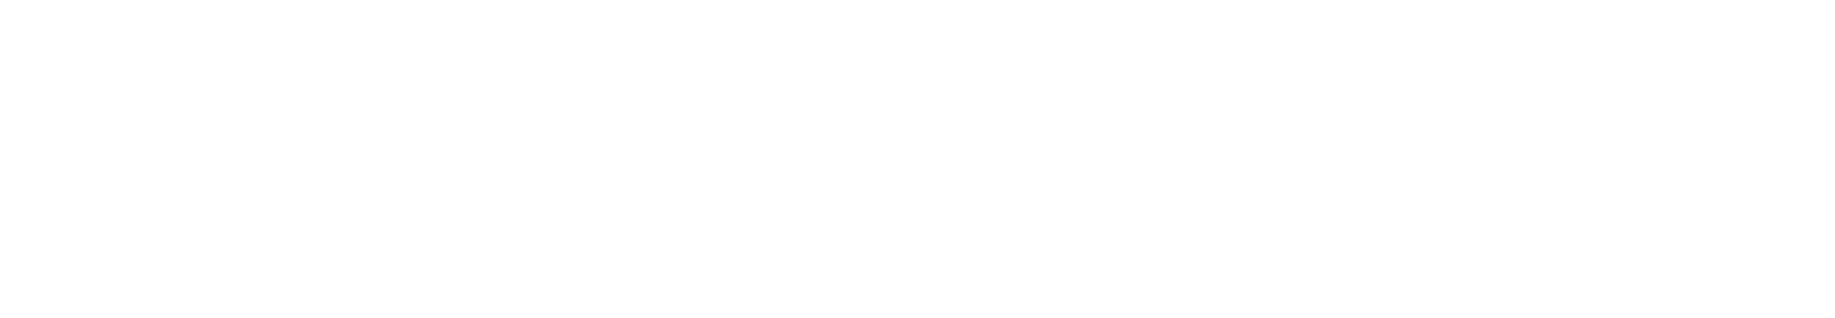 منبع نیویورک تایمز